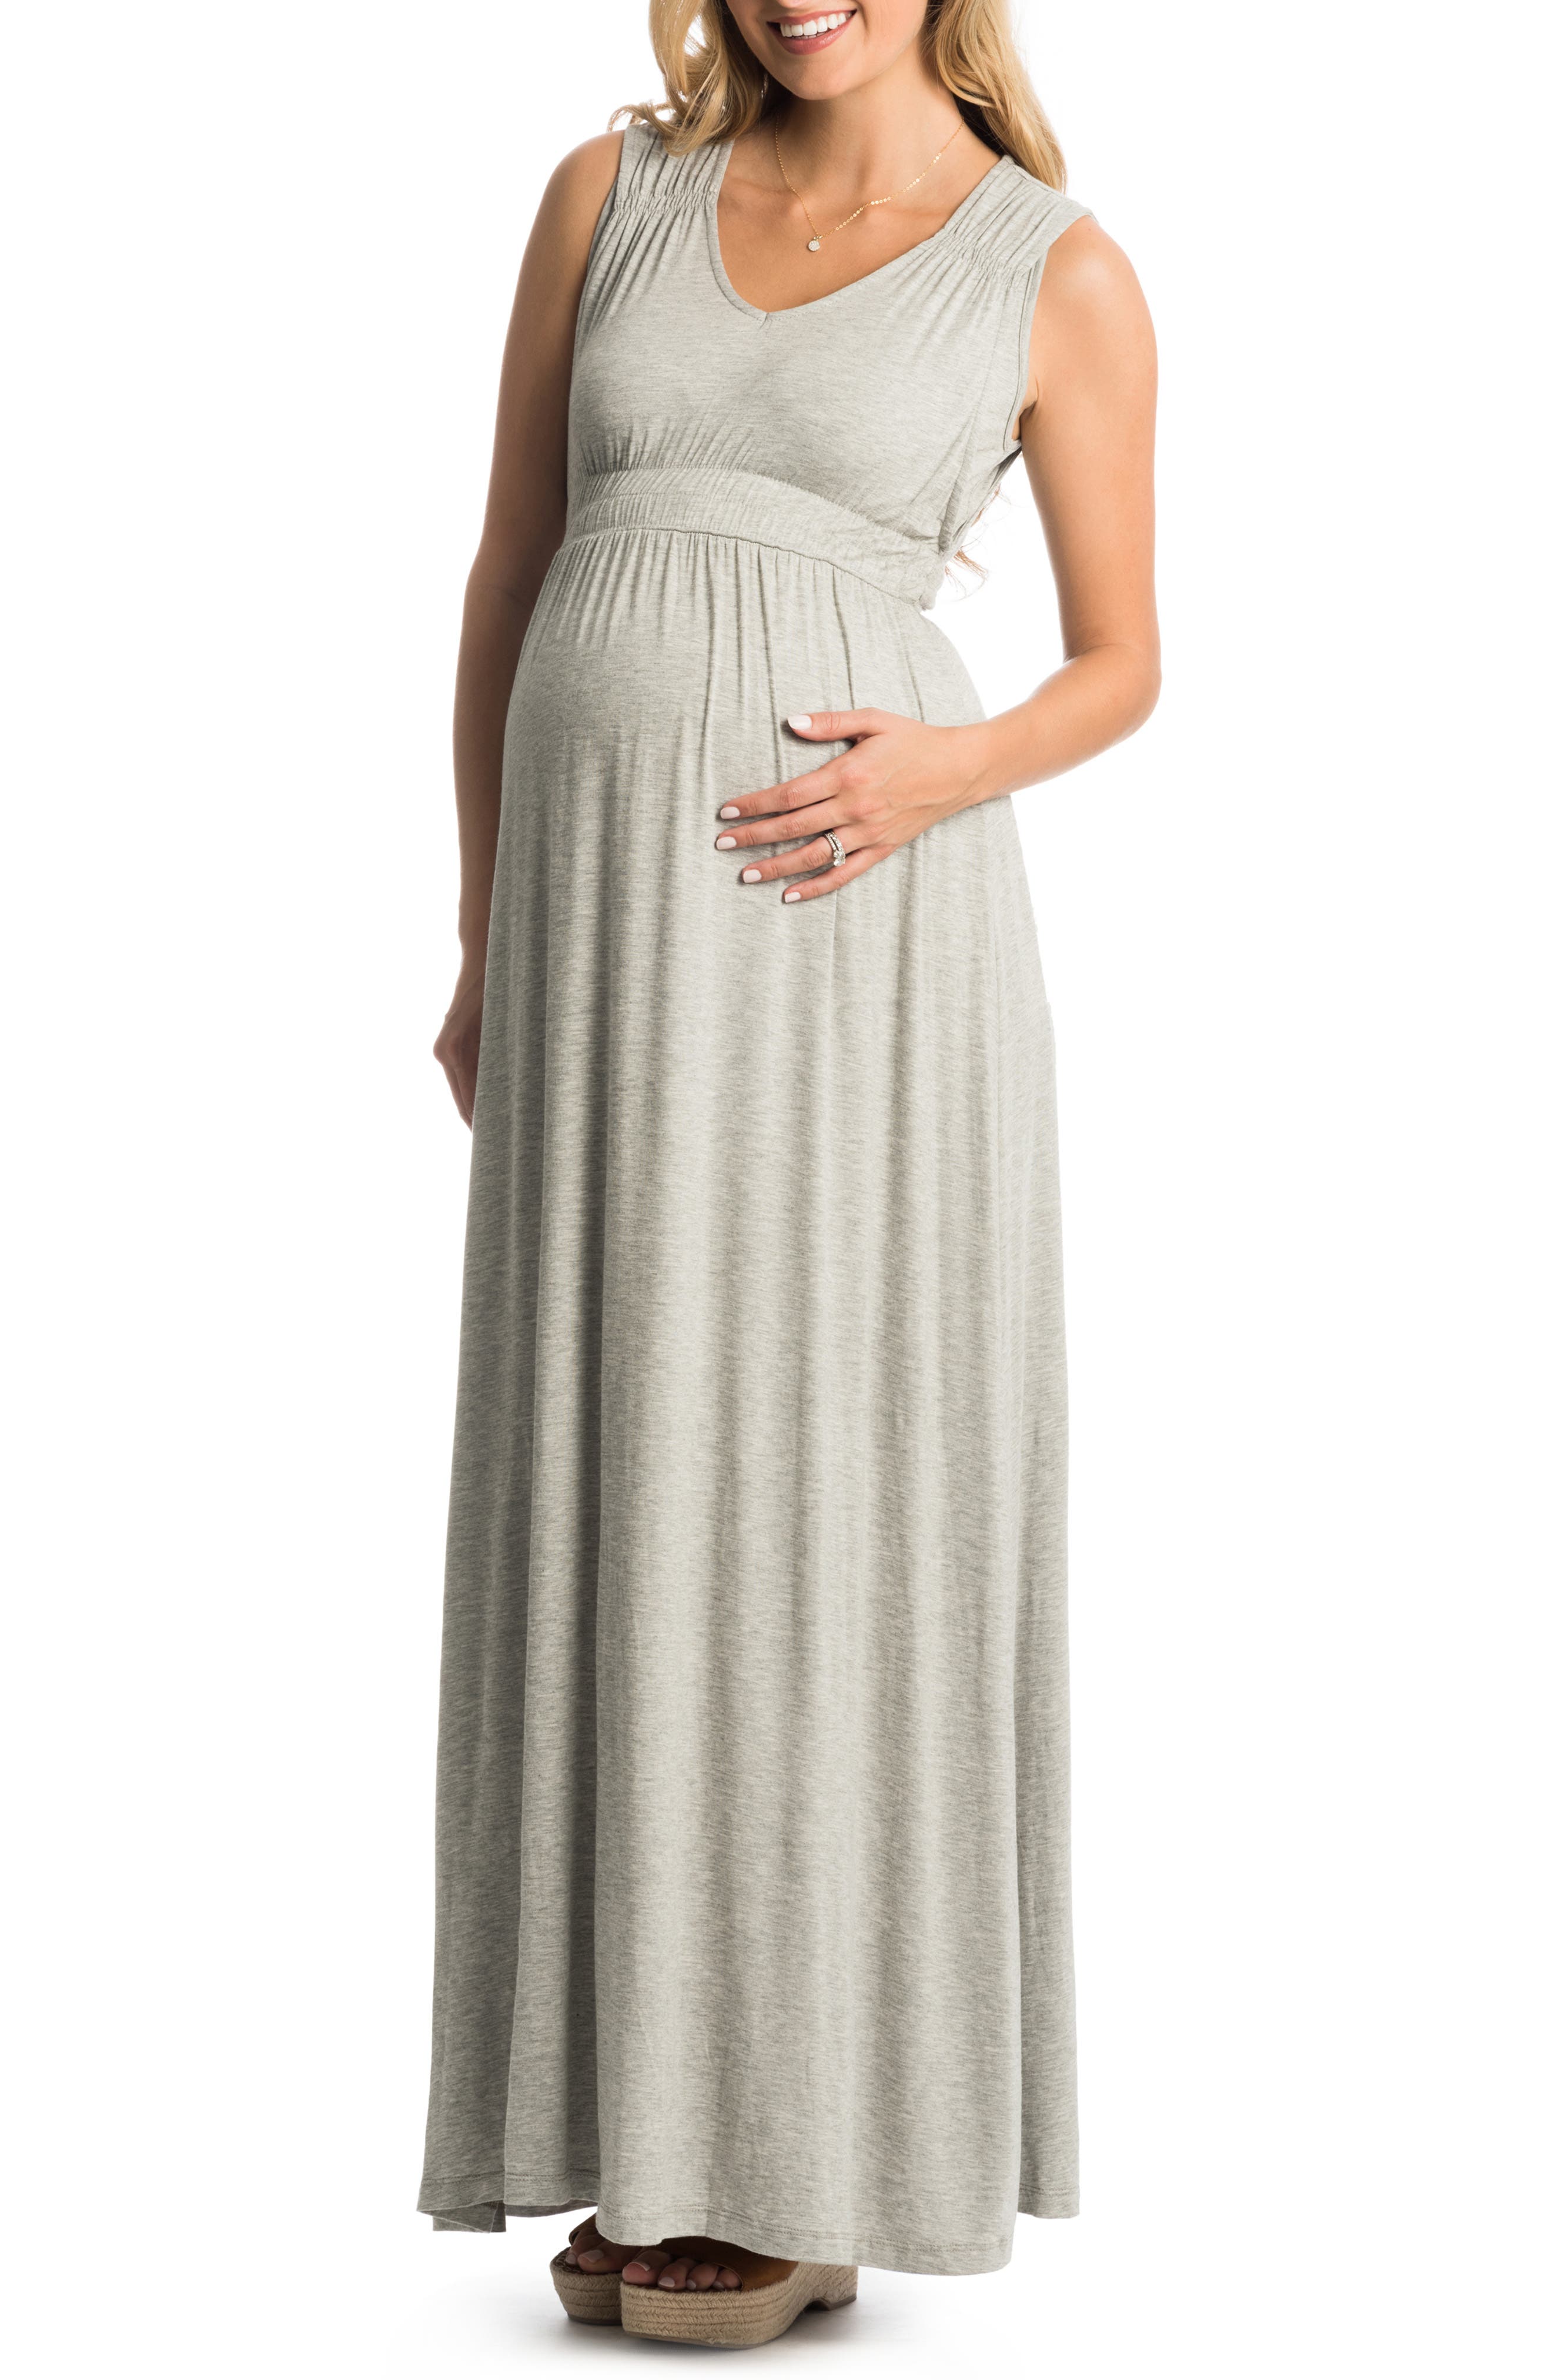 Everly Grey Womens Maternity Jill Maxi Dress